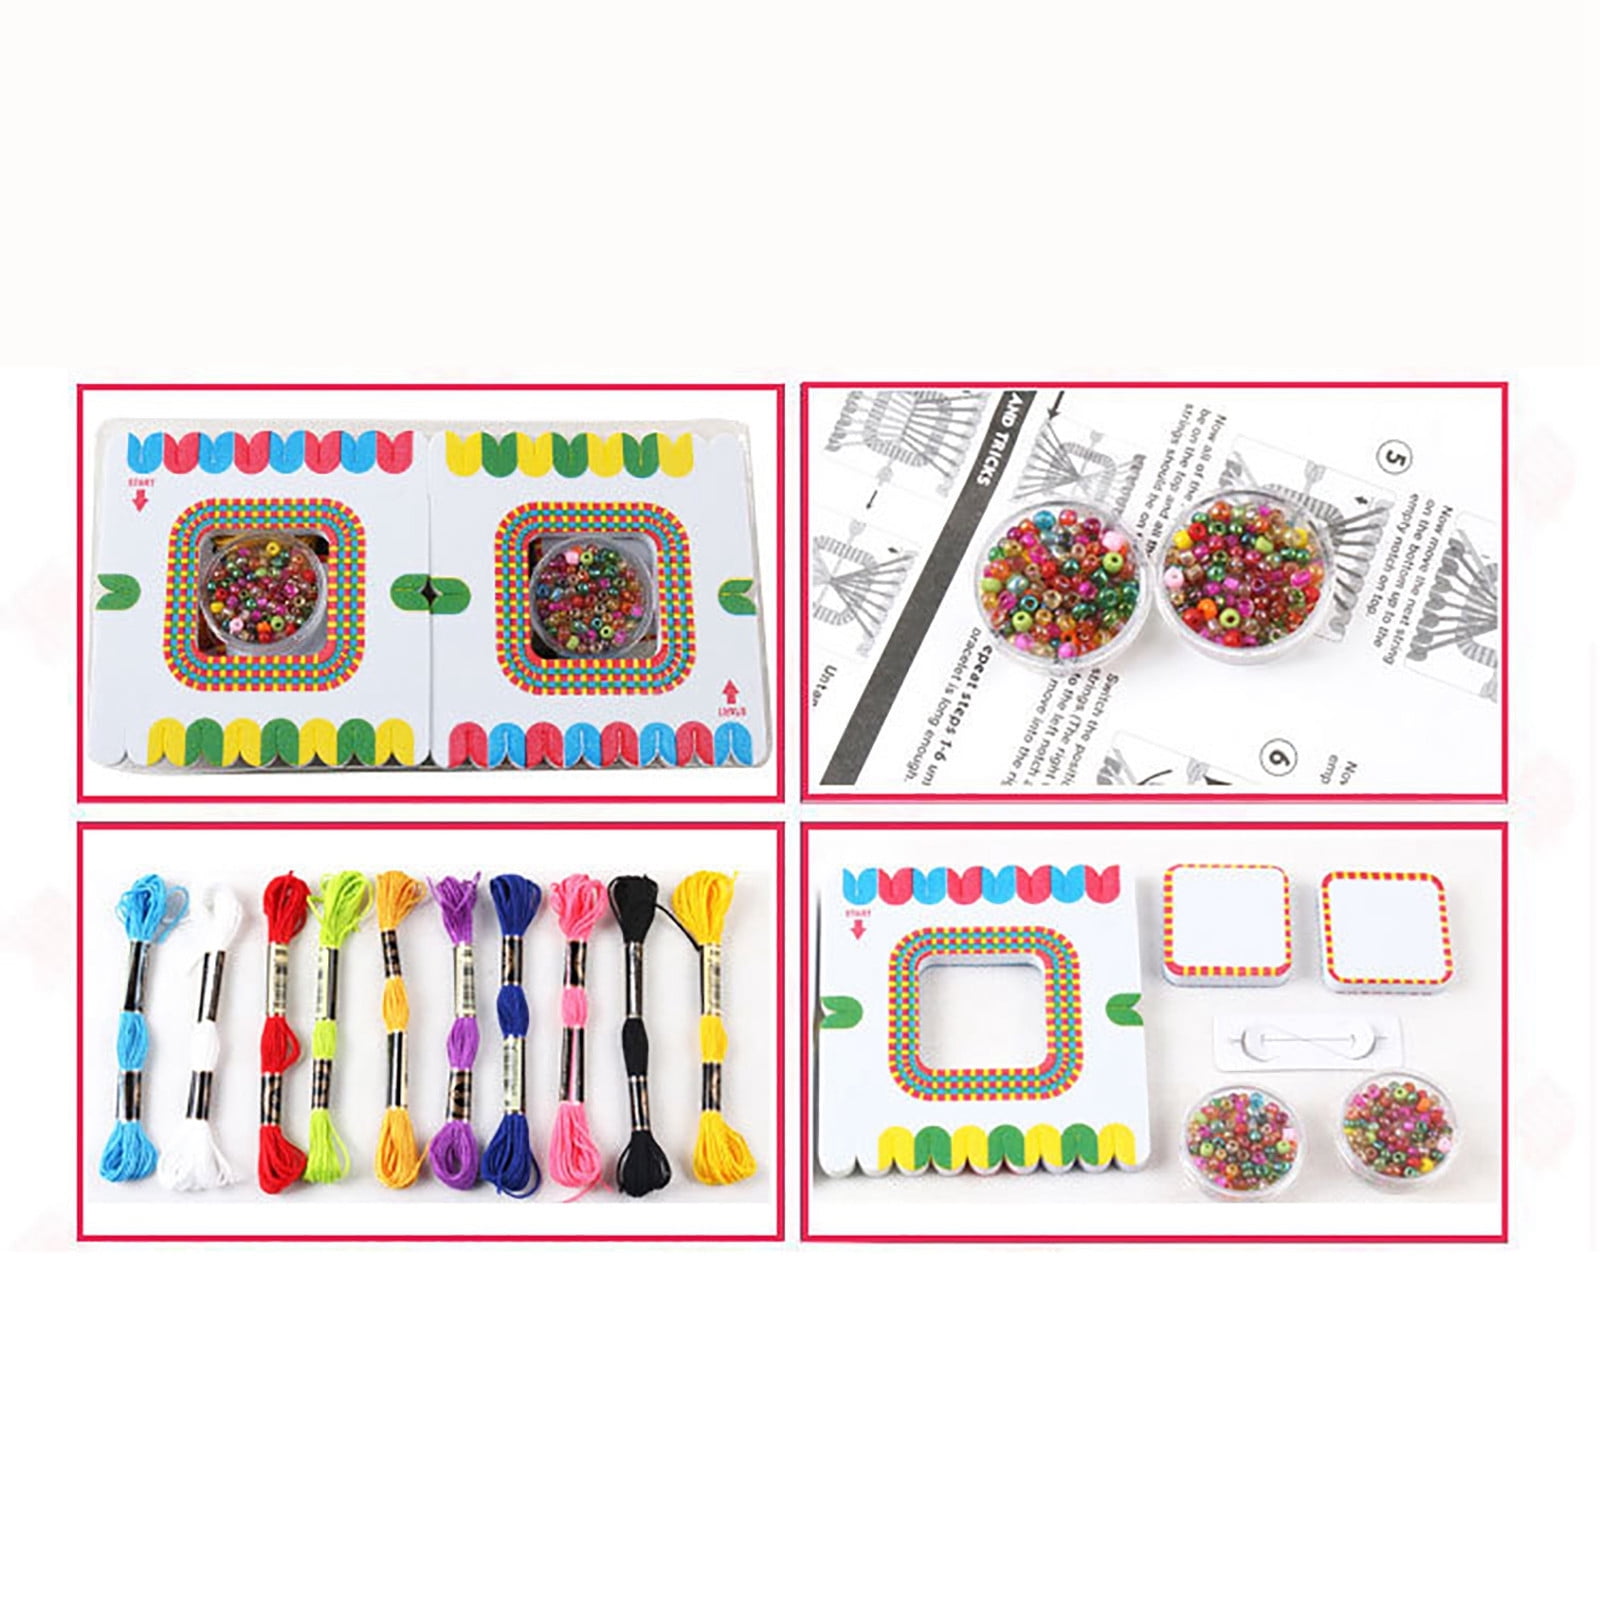 Kizmyee Friendship Bracelet Making Kit 112 PCS Toy, Presents for Ages 7 8 9  10 11 12 Year Old Teen Girl, for DIY Refill Bracelet Making Craft Kits